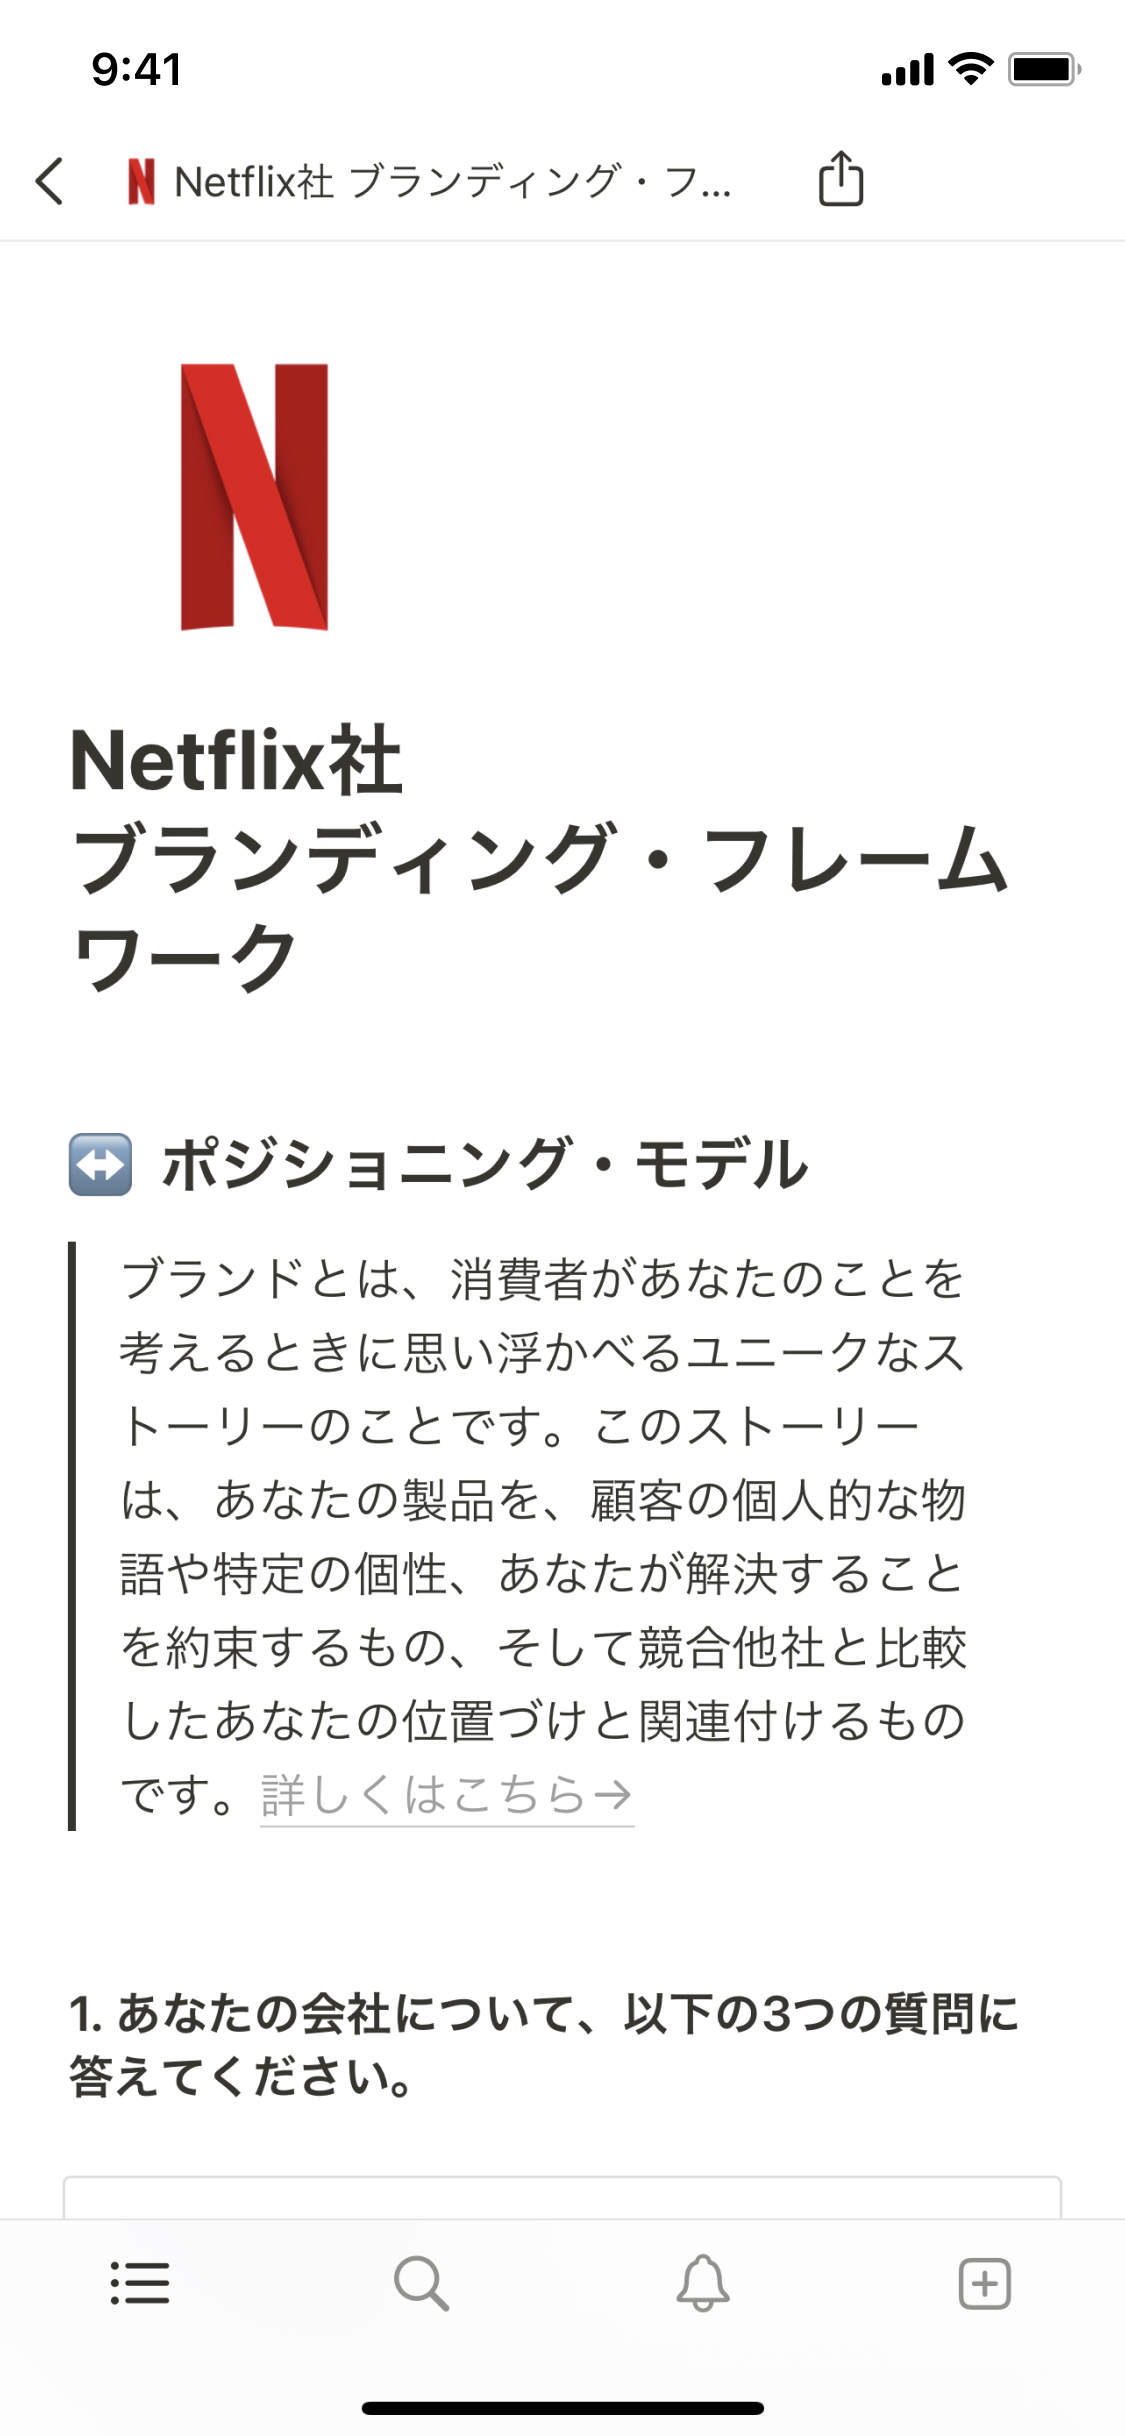 The mobile image for the Netflix's branding framework template